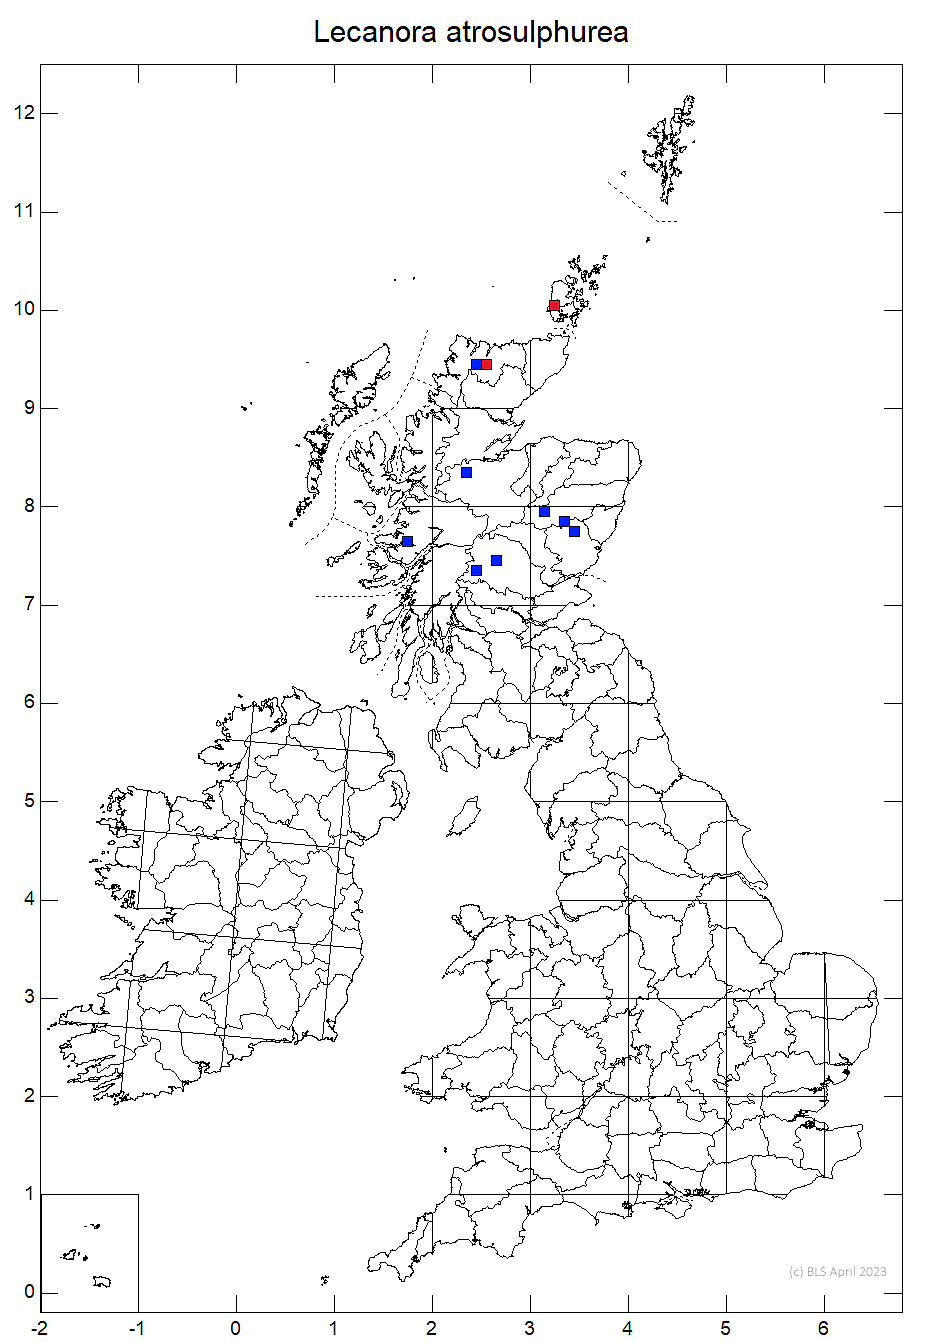 Lecanora atrosulphurea 10km sq distribution map